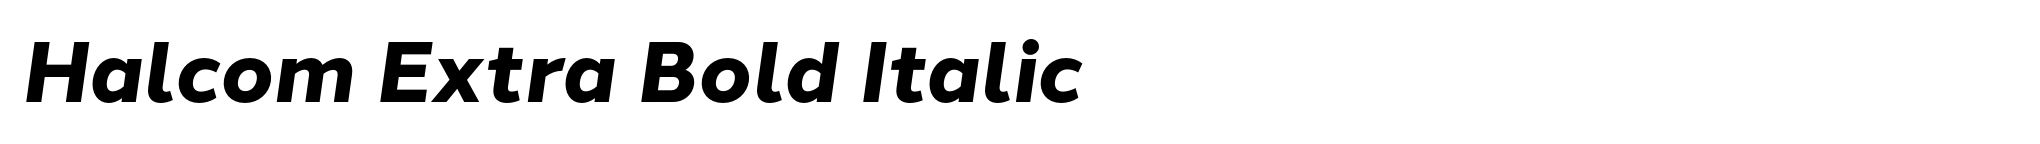 Halcom Extra Bold Italic image